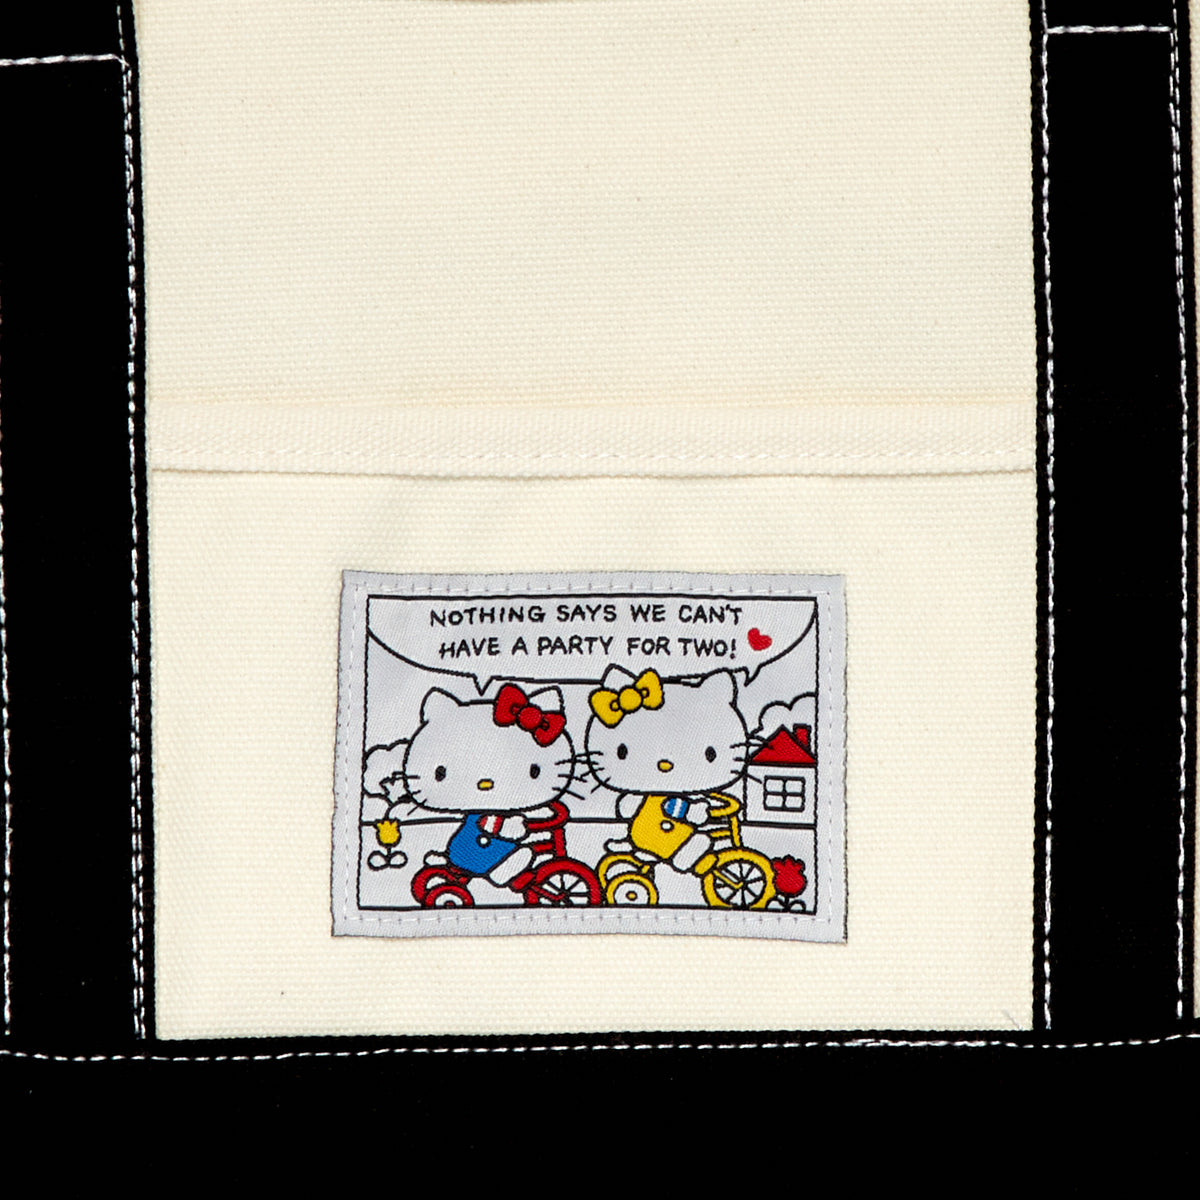 Hello Kitty Canvas Tote (Small) Bags Japan Original   